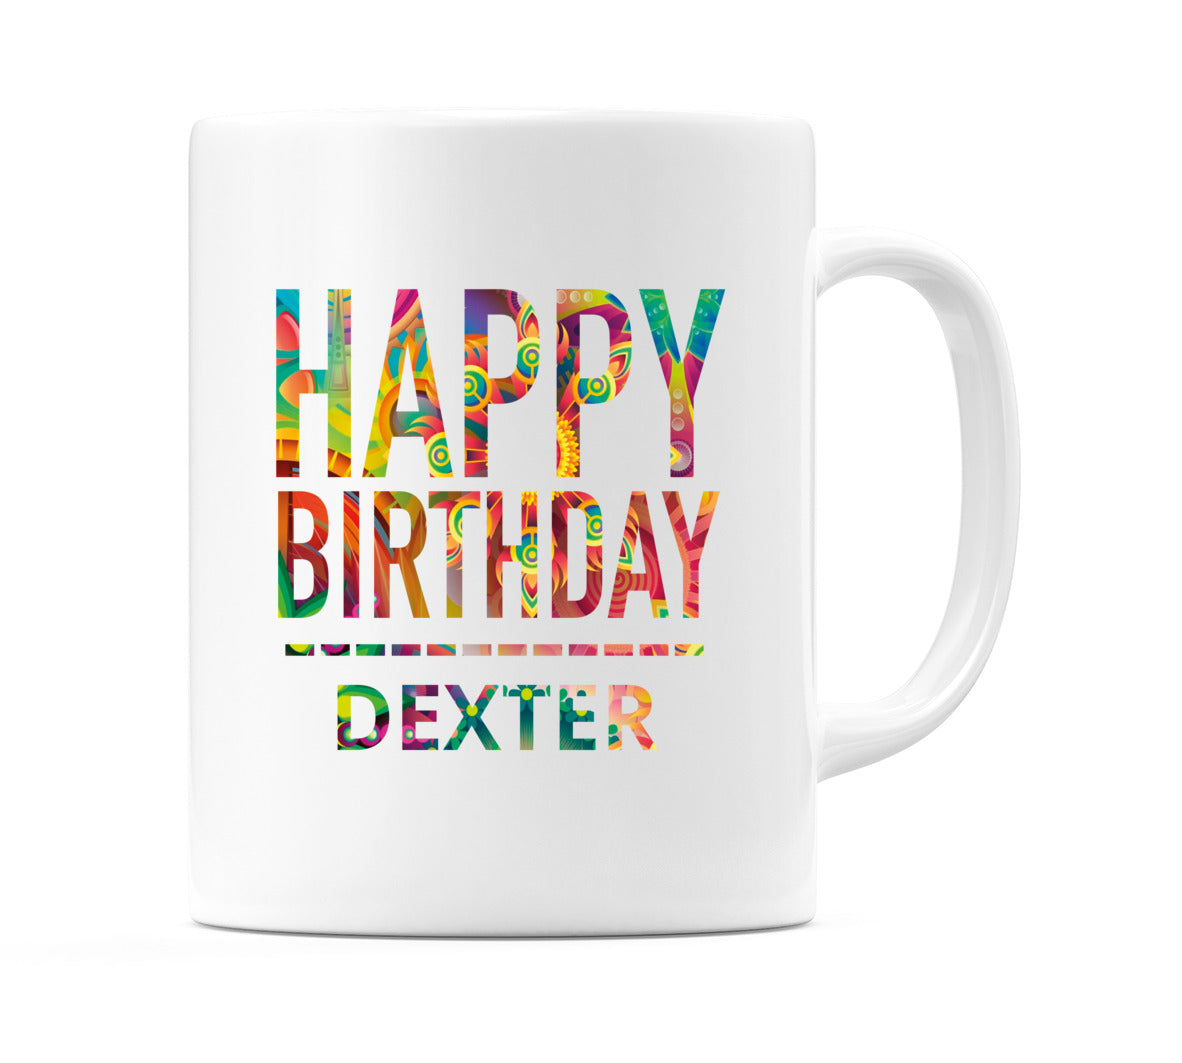 Happy Birthday Dexter (Tie Dye Effect) Mug Cup by WeDoMugs